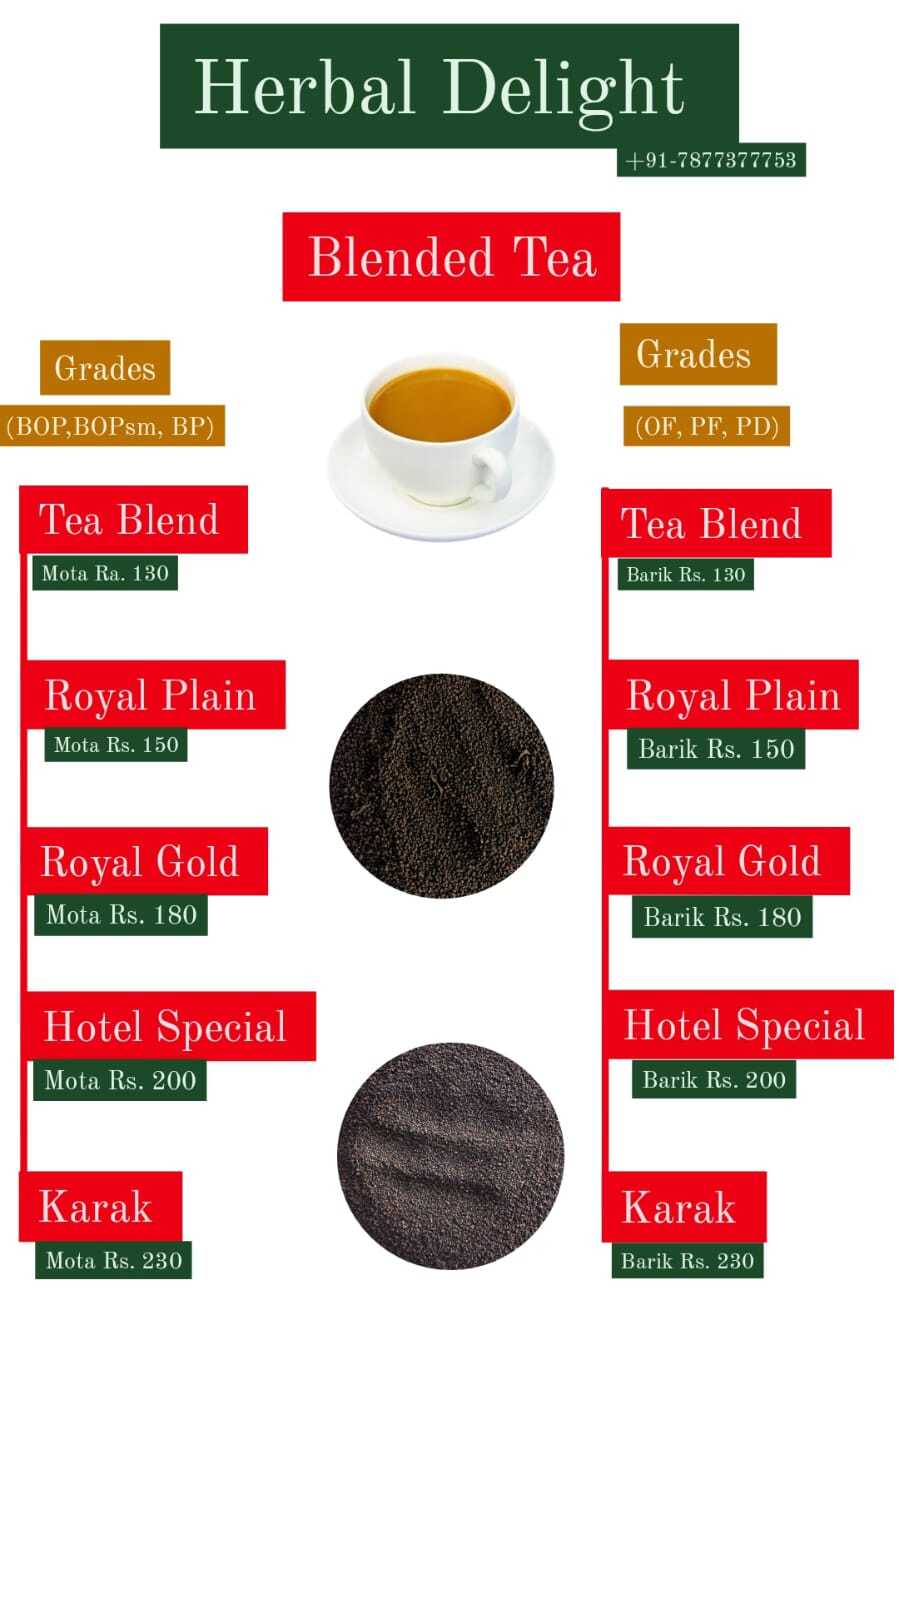 Monkhooli Premium Upper Assam CTC Tea